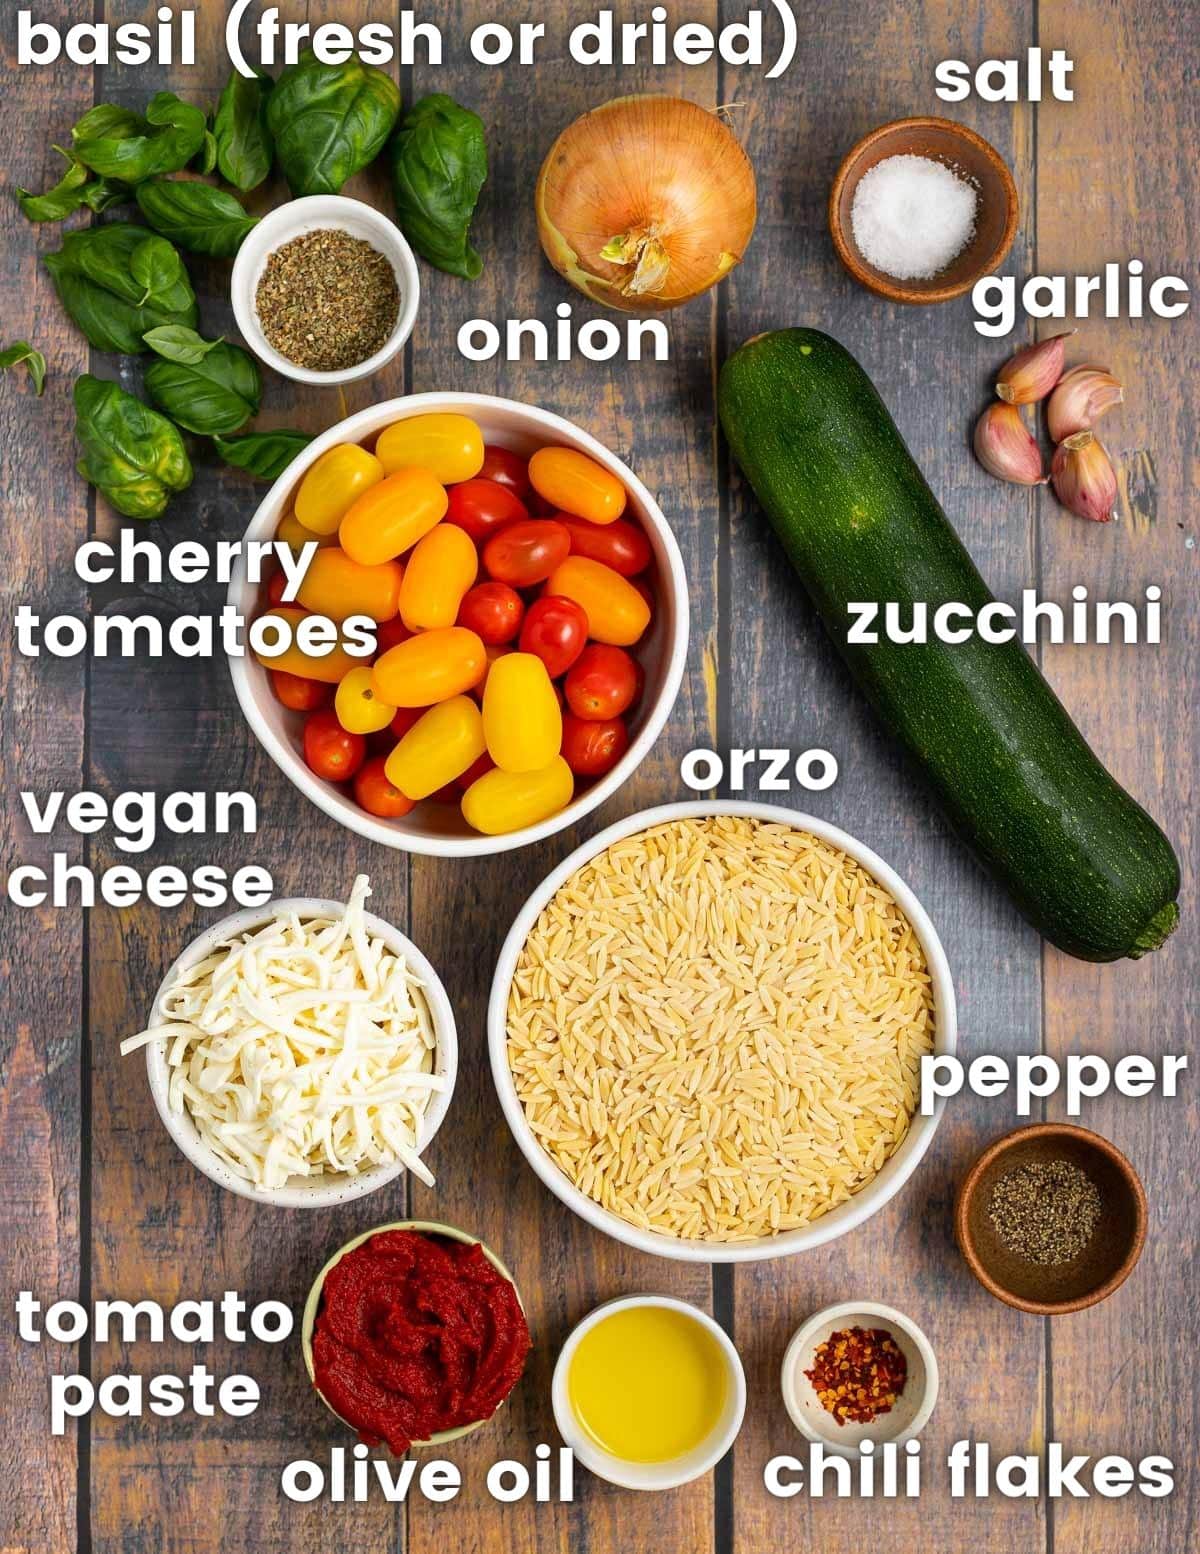 ingredients for vegan orzo recipe 